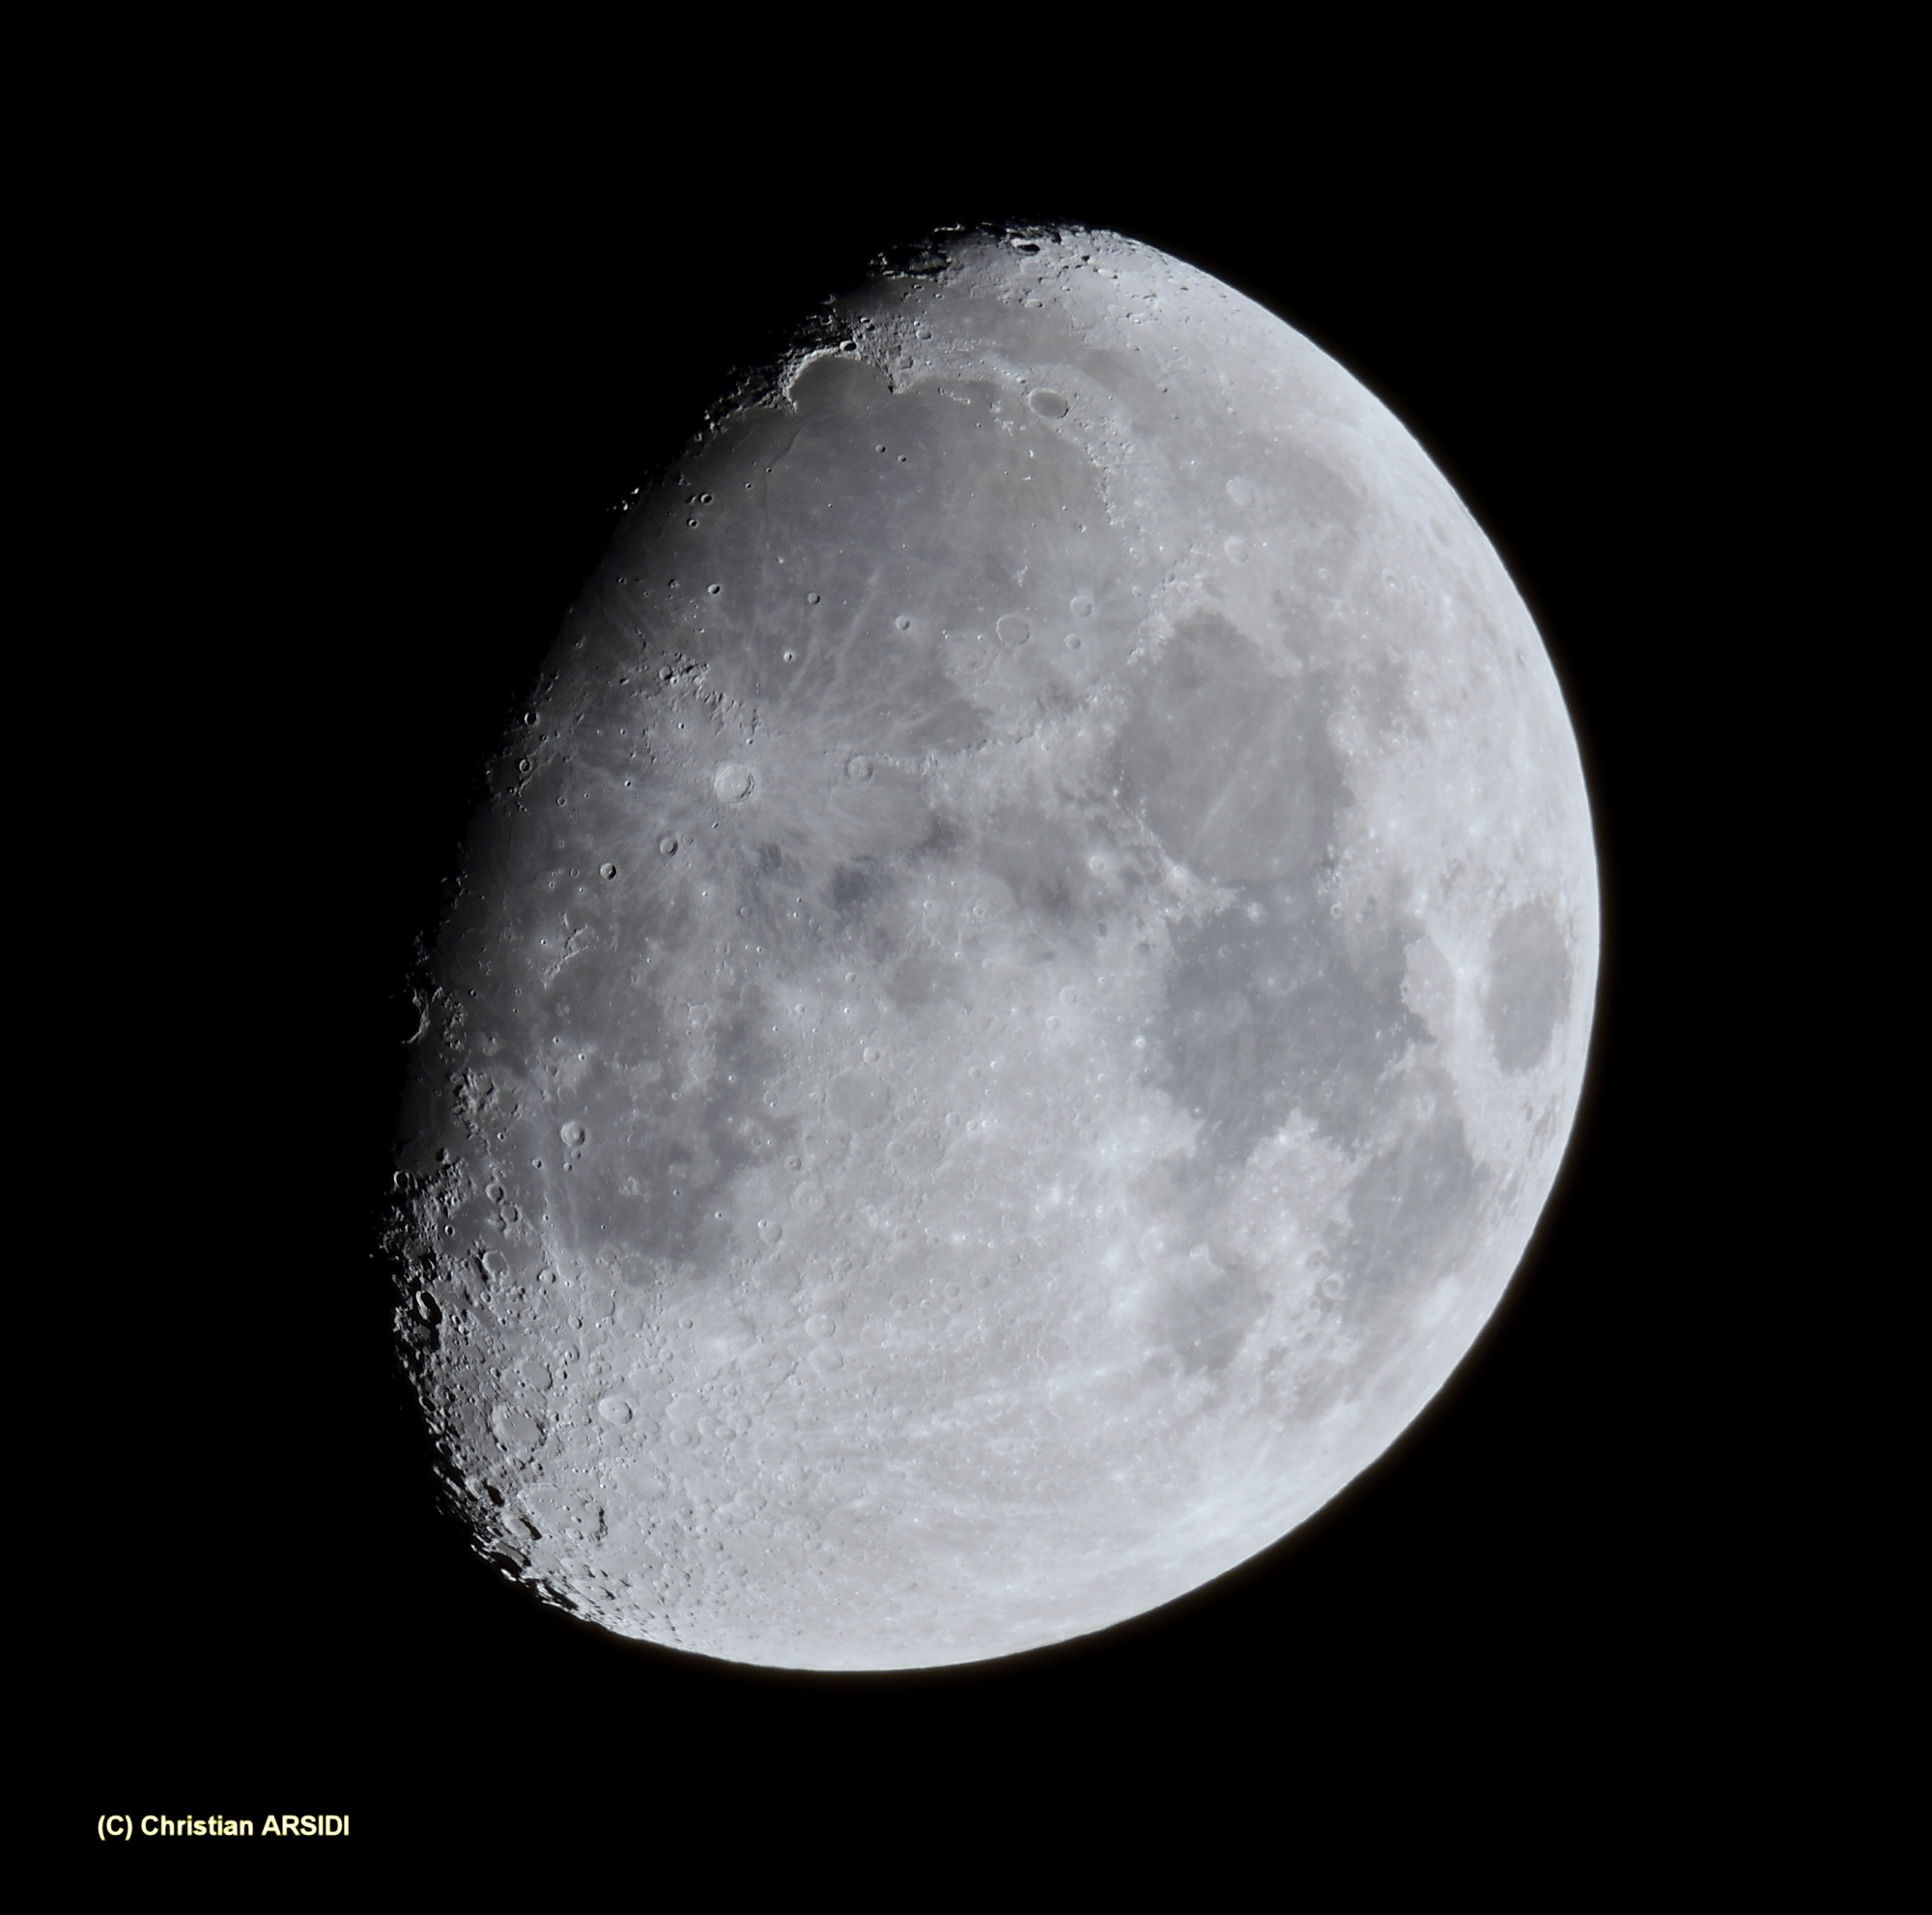 La Lune 6 images recadrée_DxO-2 85% BV CA.jpg